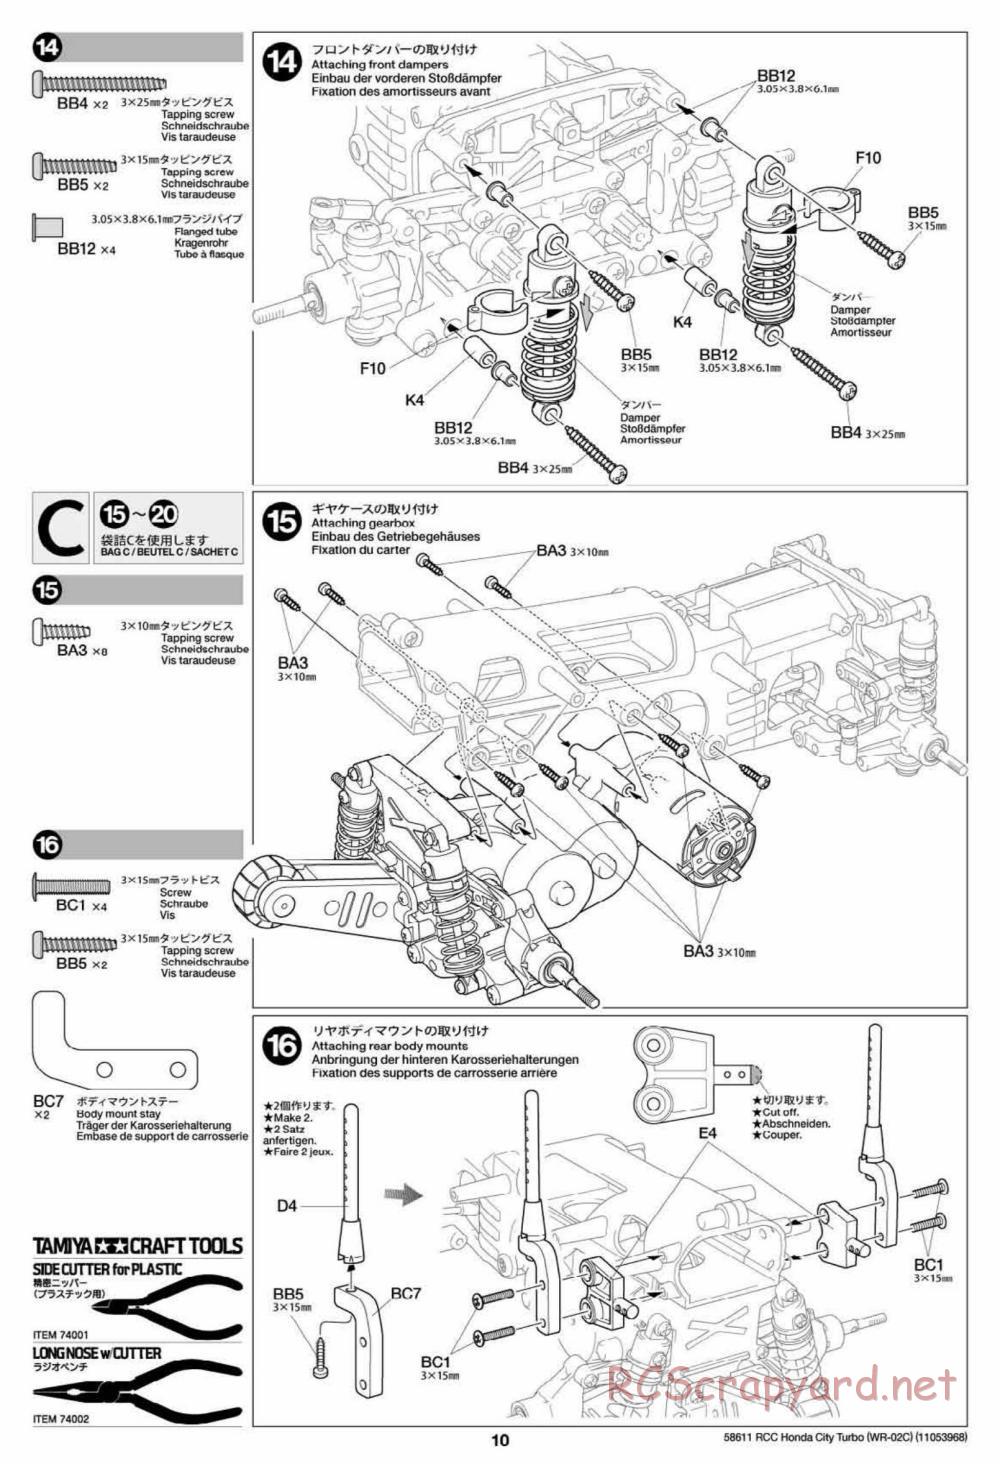 Tamiya - WR-02C Chassis - Manual - Page 10